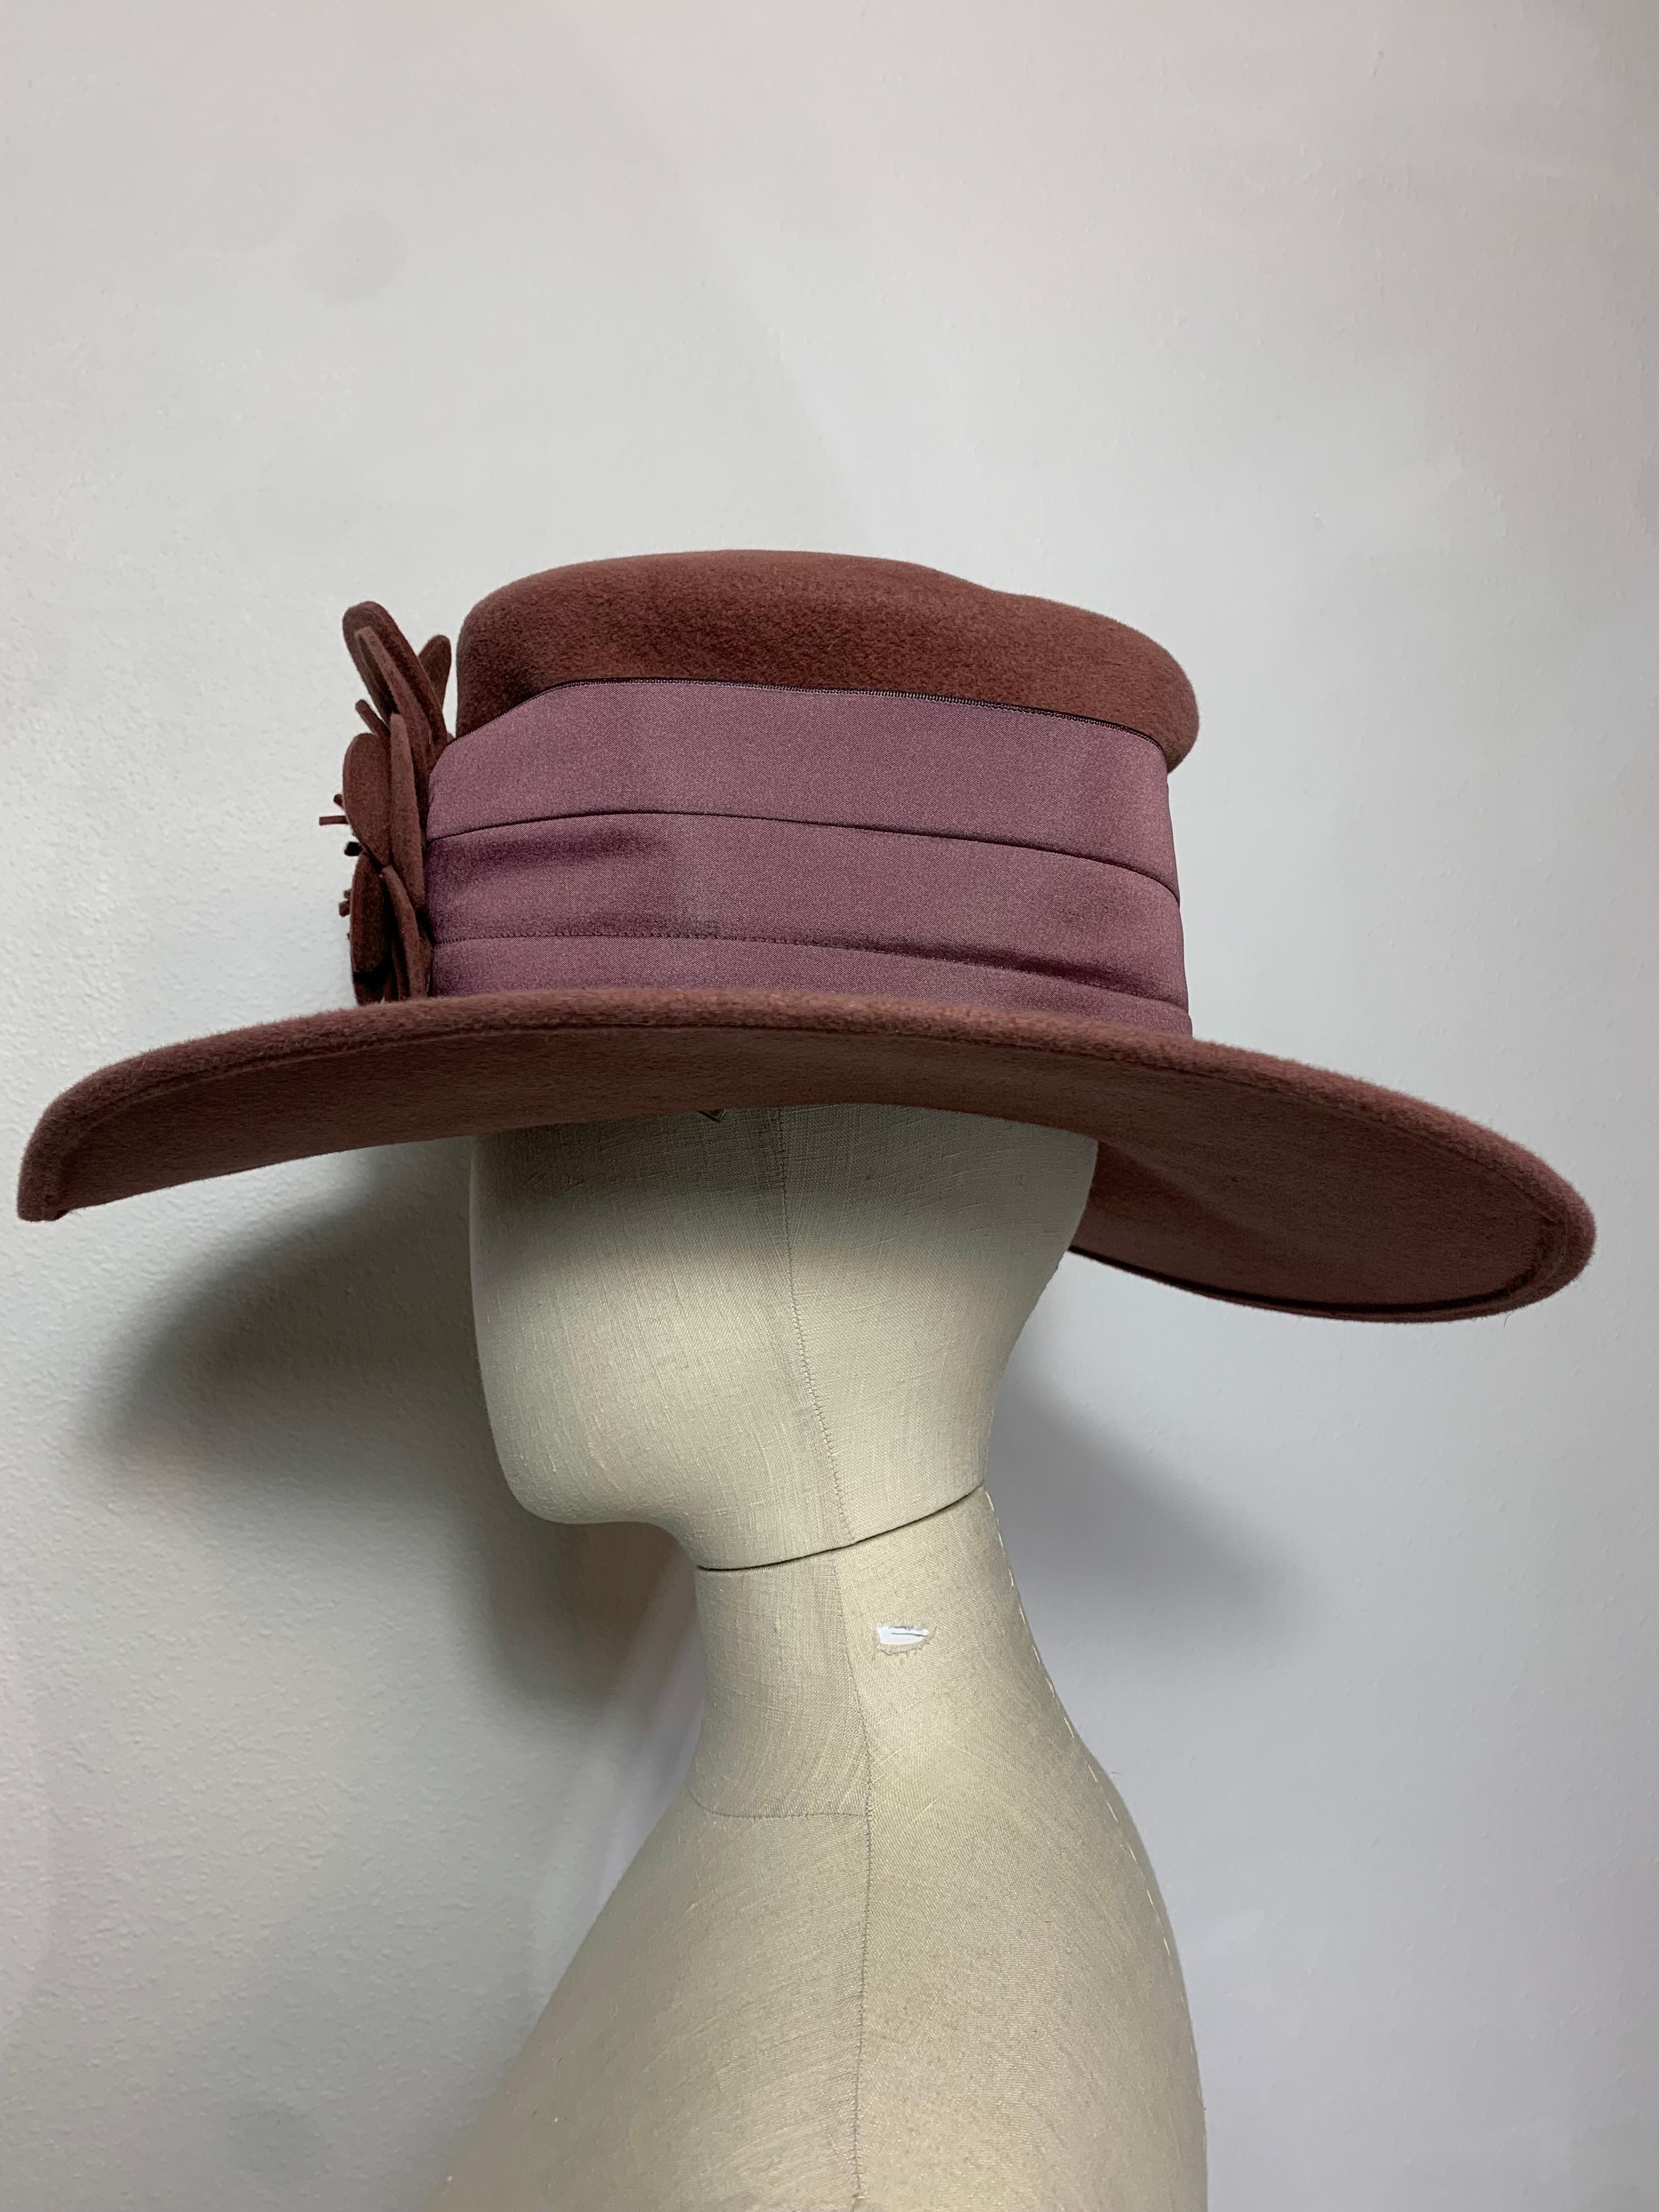 Maison Michel Mauve Wool Felt High Top Hat w Matching Flowers & Ribbon Band For Sale 3